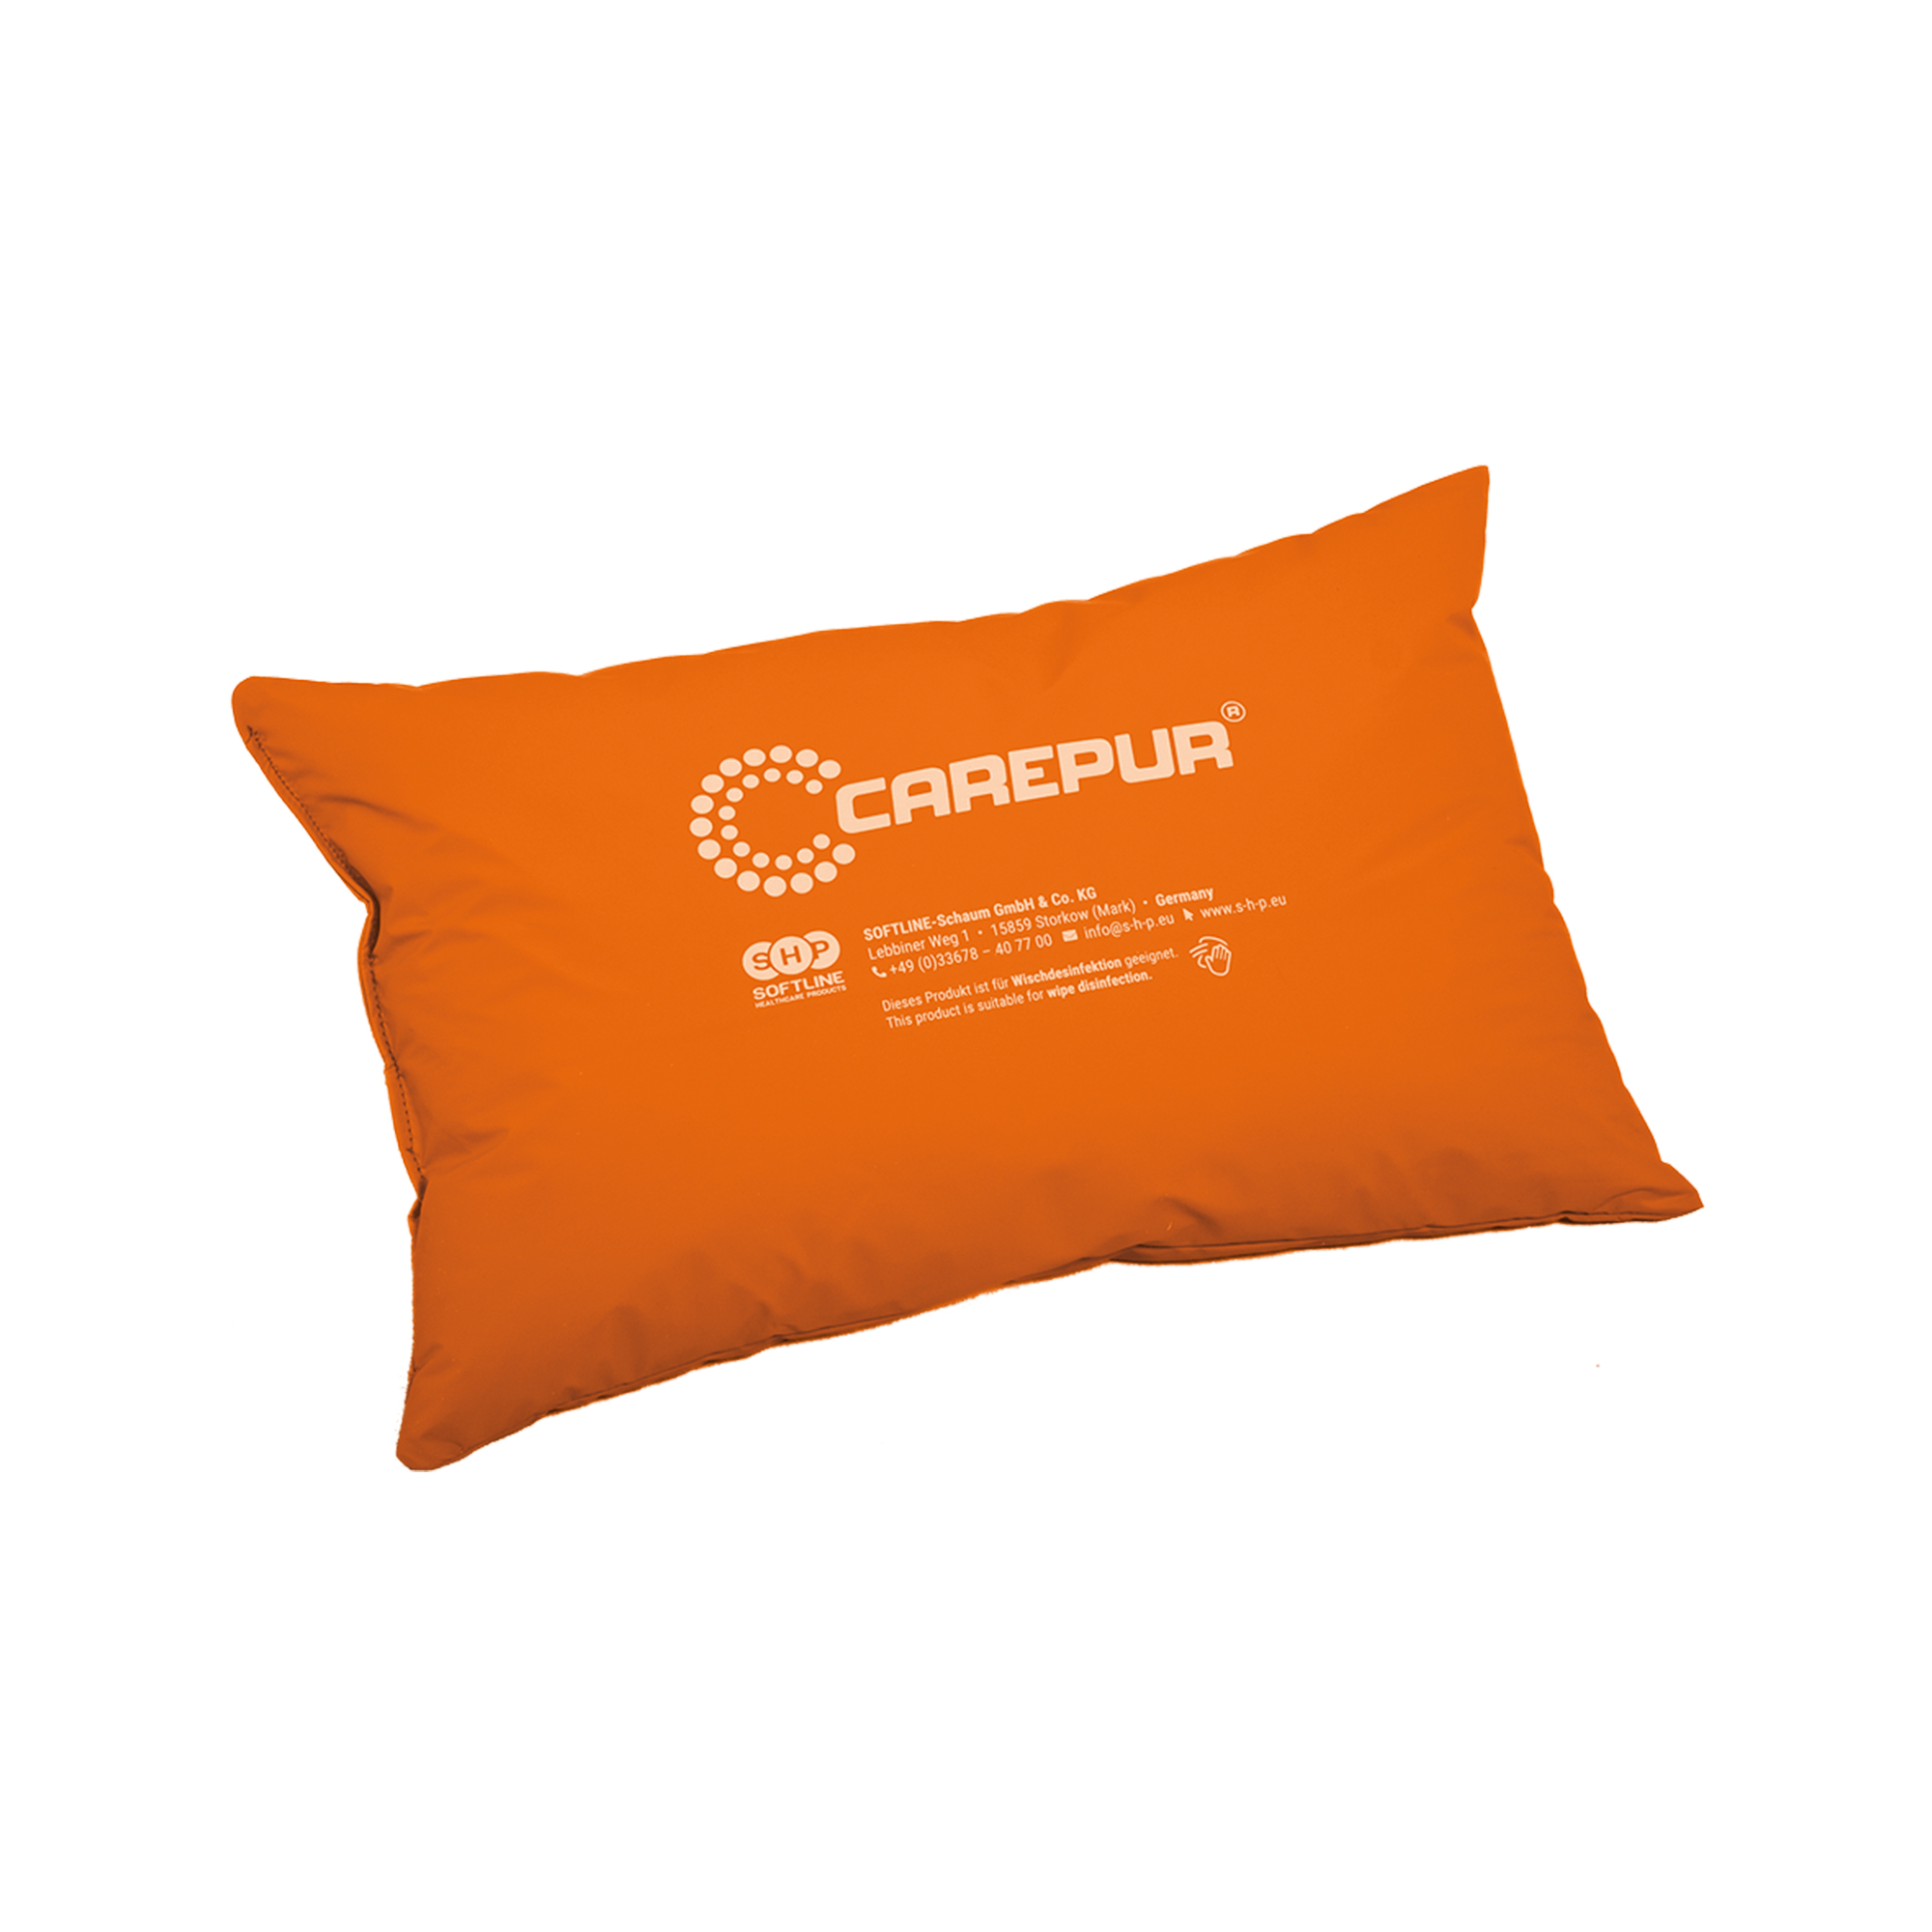 SHP CAREPUR Universal Positioning Set, 3 pillows in various sizes